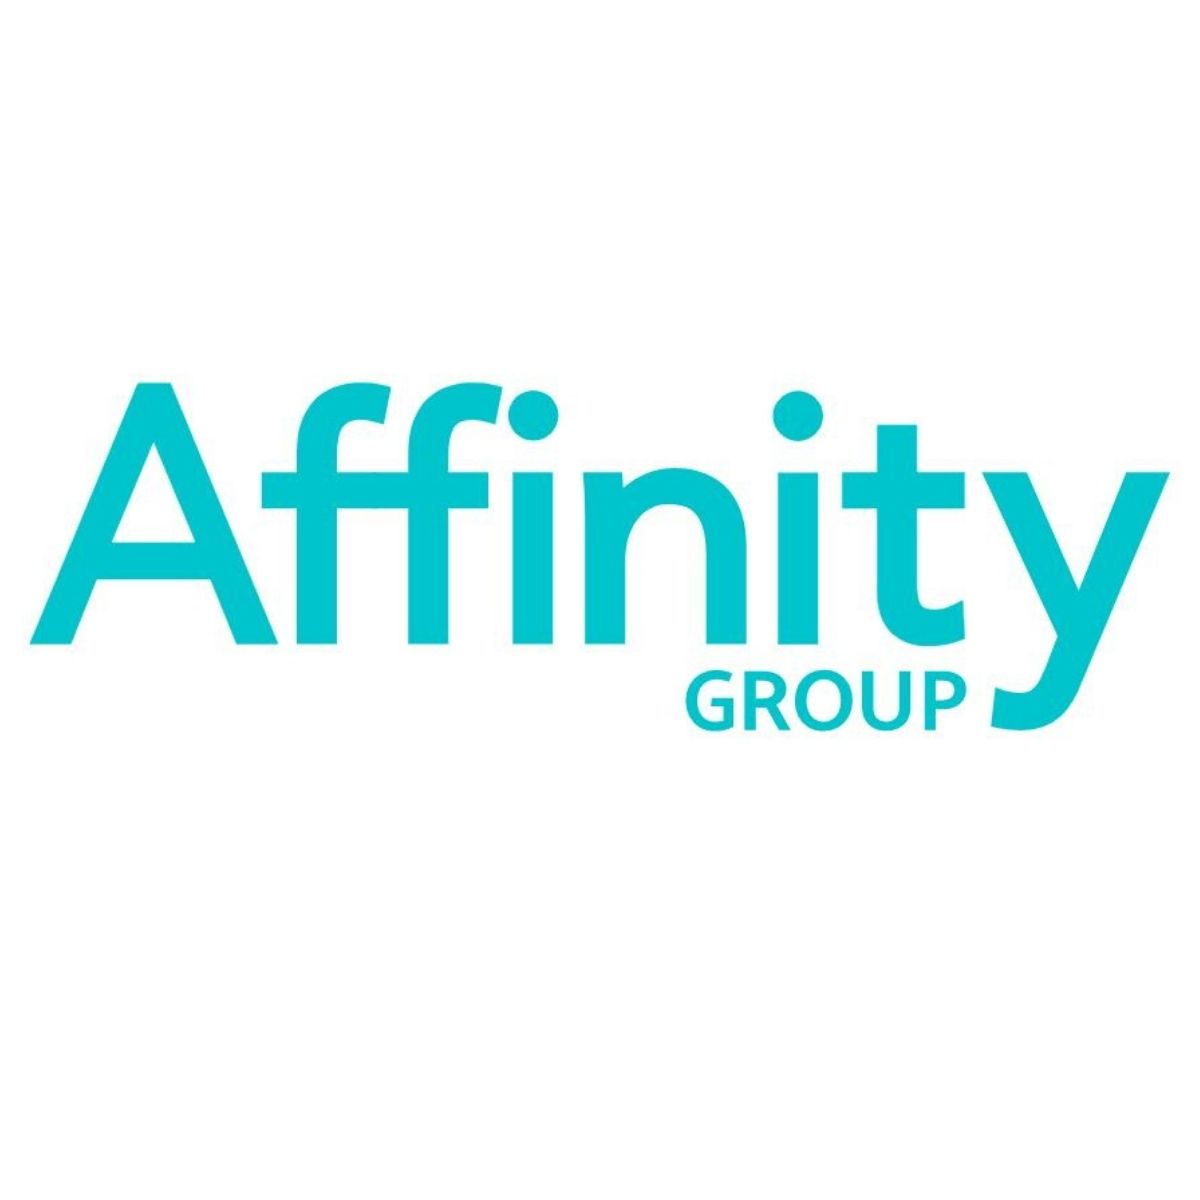 Member Spotlight – Affinity Group: 10 years in Malta